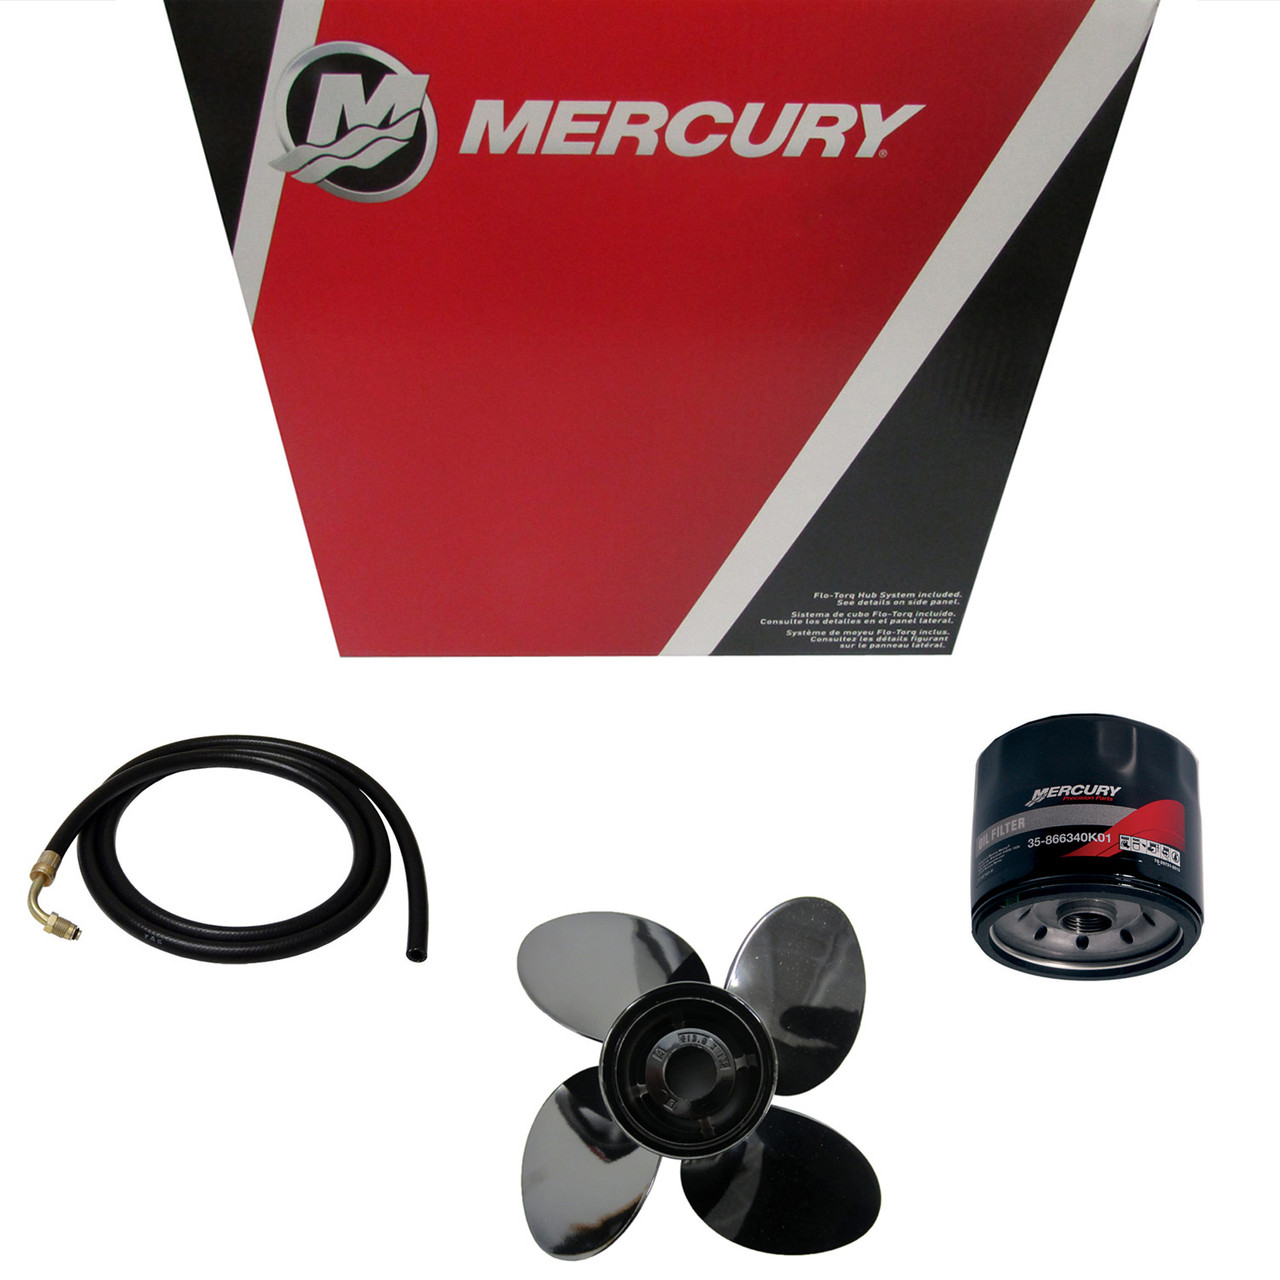 Mercury Marine / Mercruiser New OEM Coil Assy-Ign, 339-830404T3